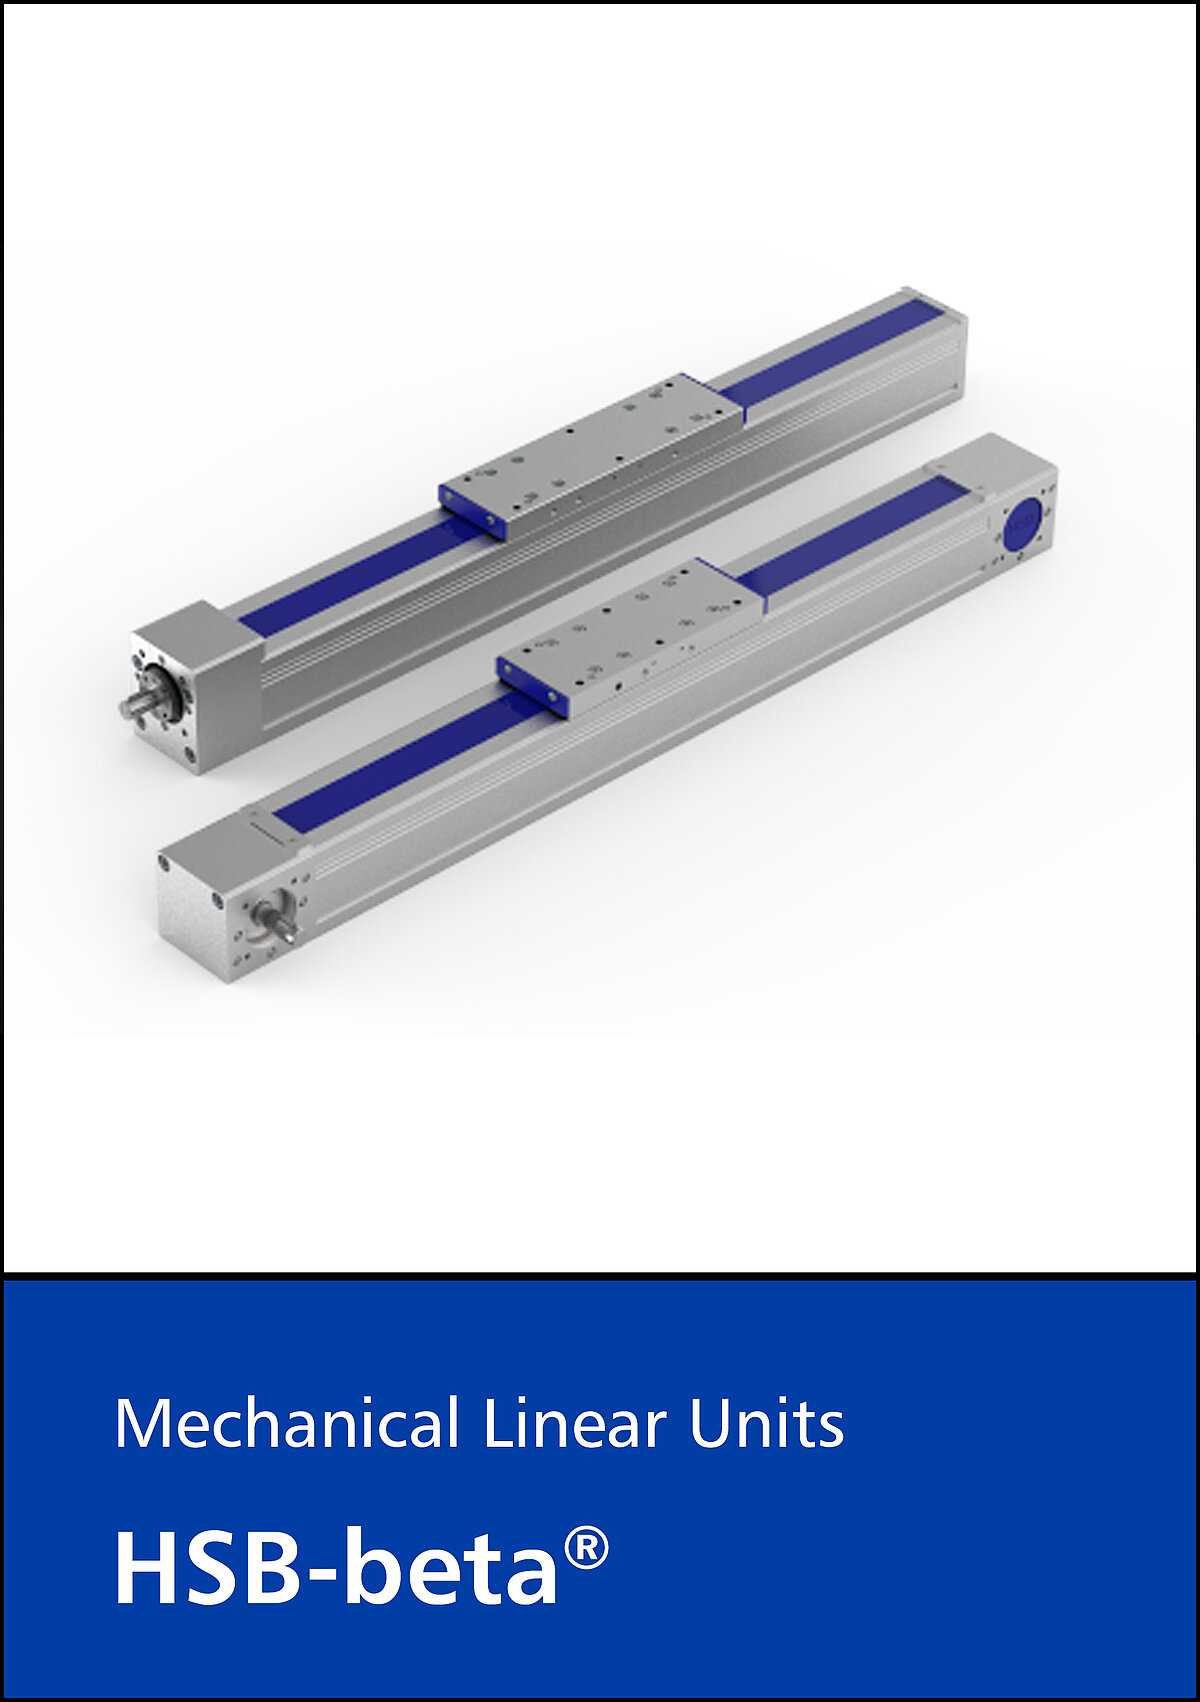 Mechanical linear drives HSB-beta®